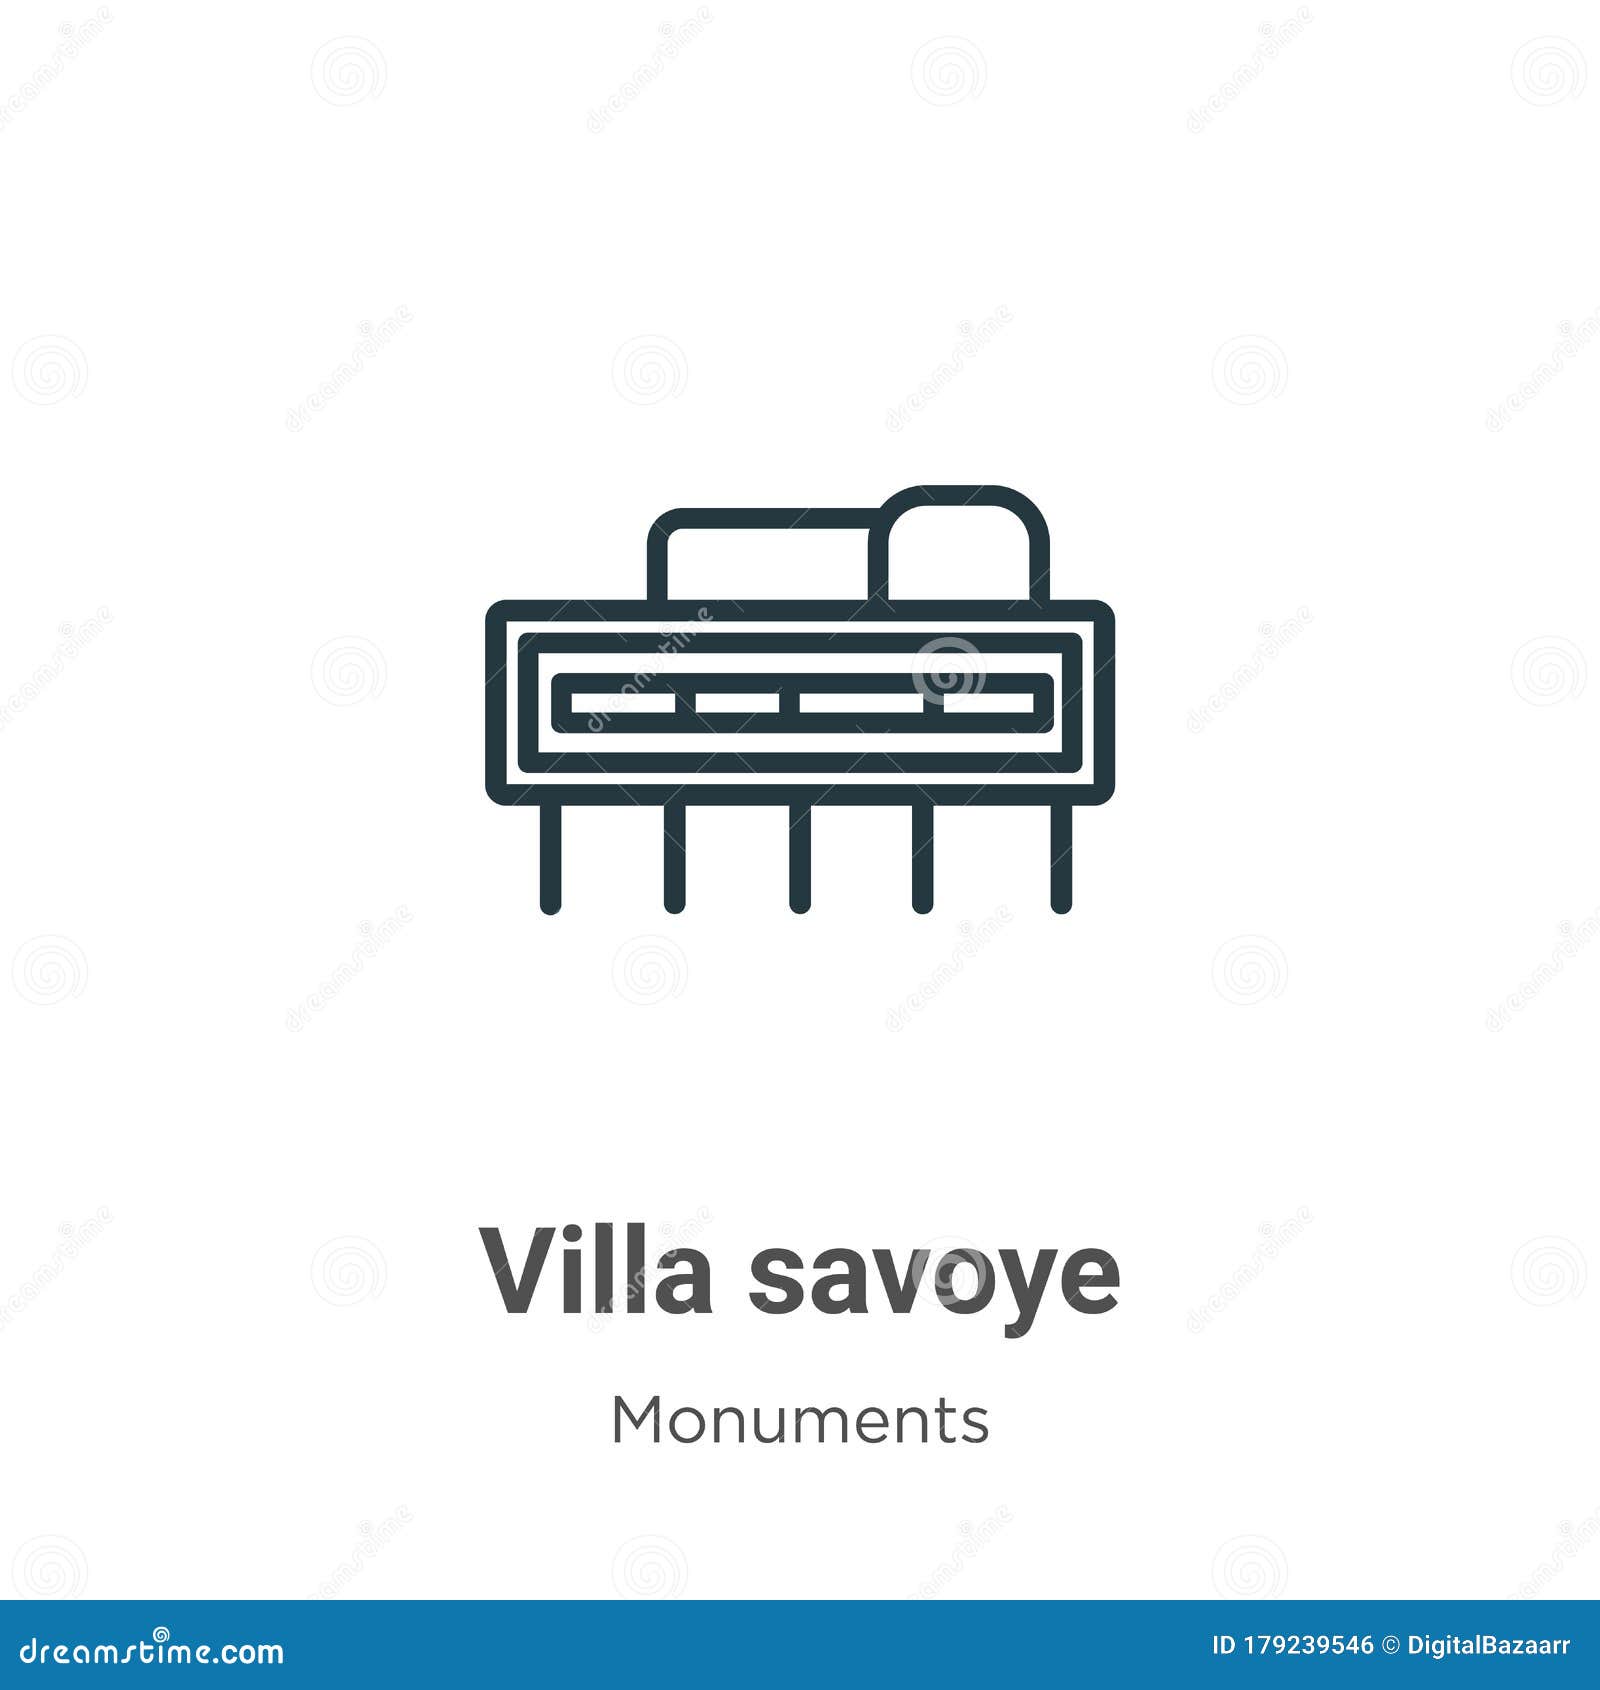 villa savoye outline  icon. thin line black villa savoye icon, flat  simple   from editable